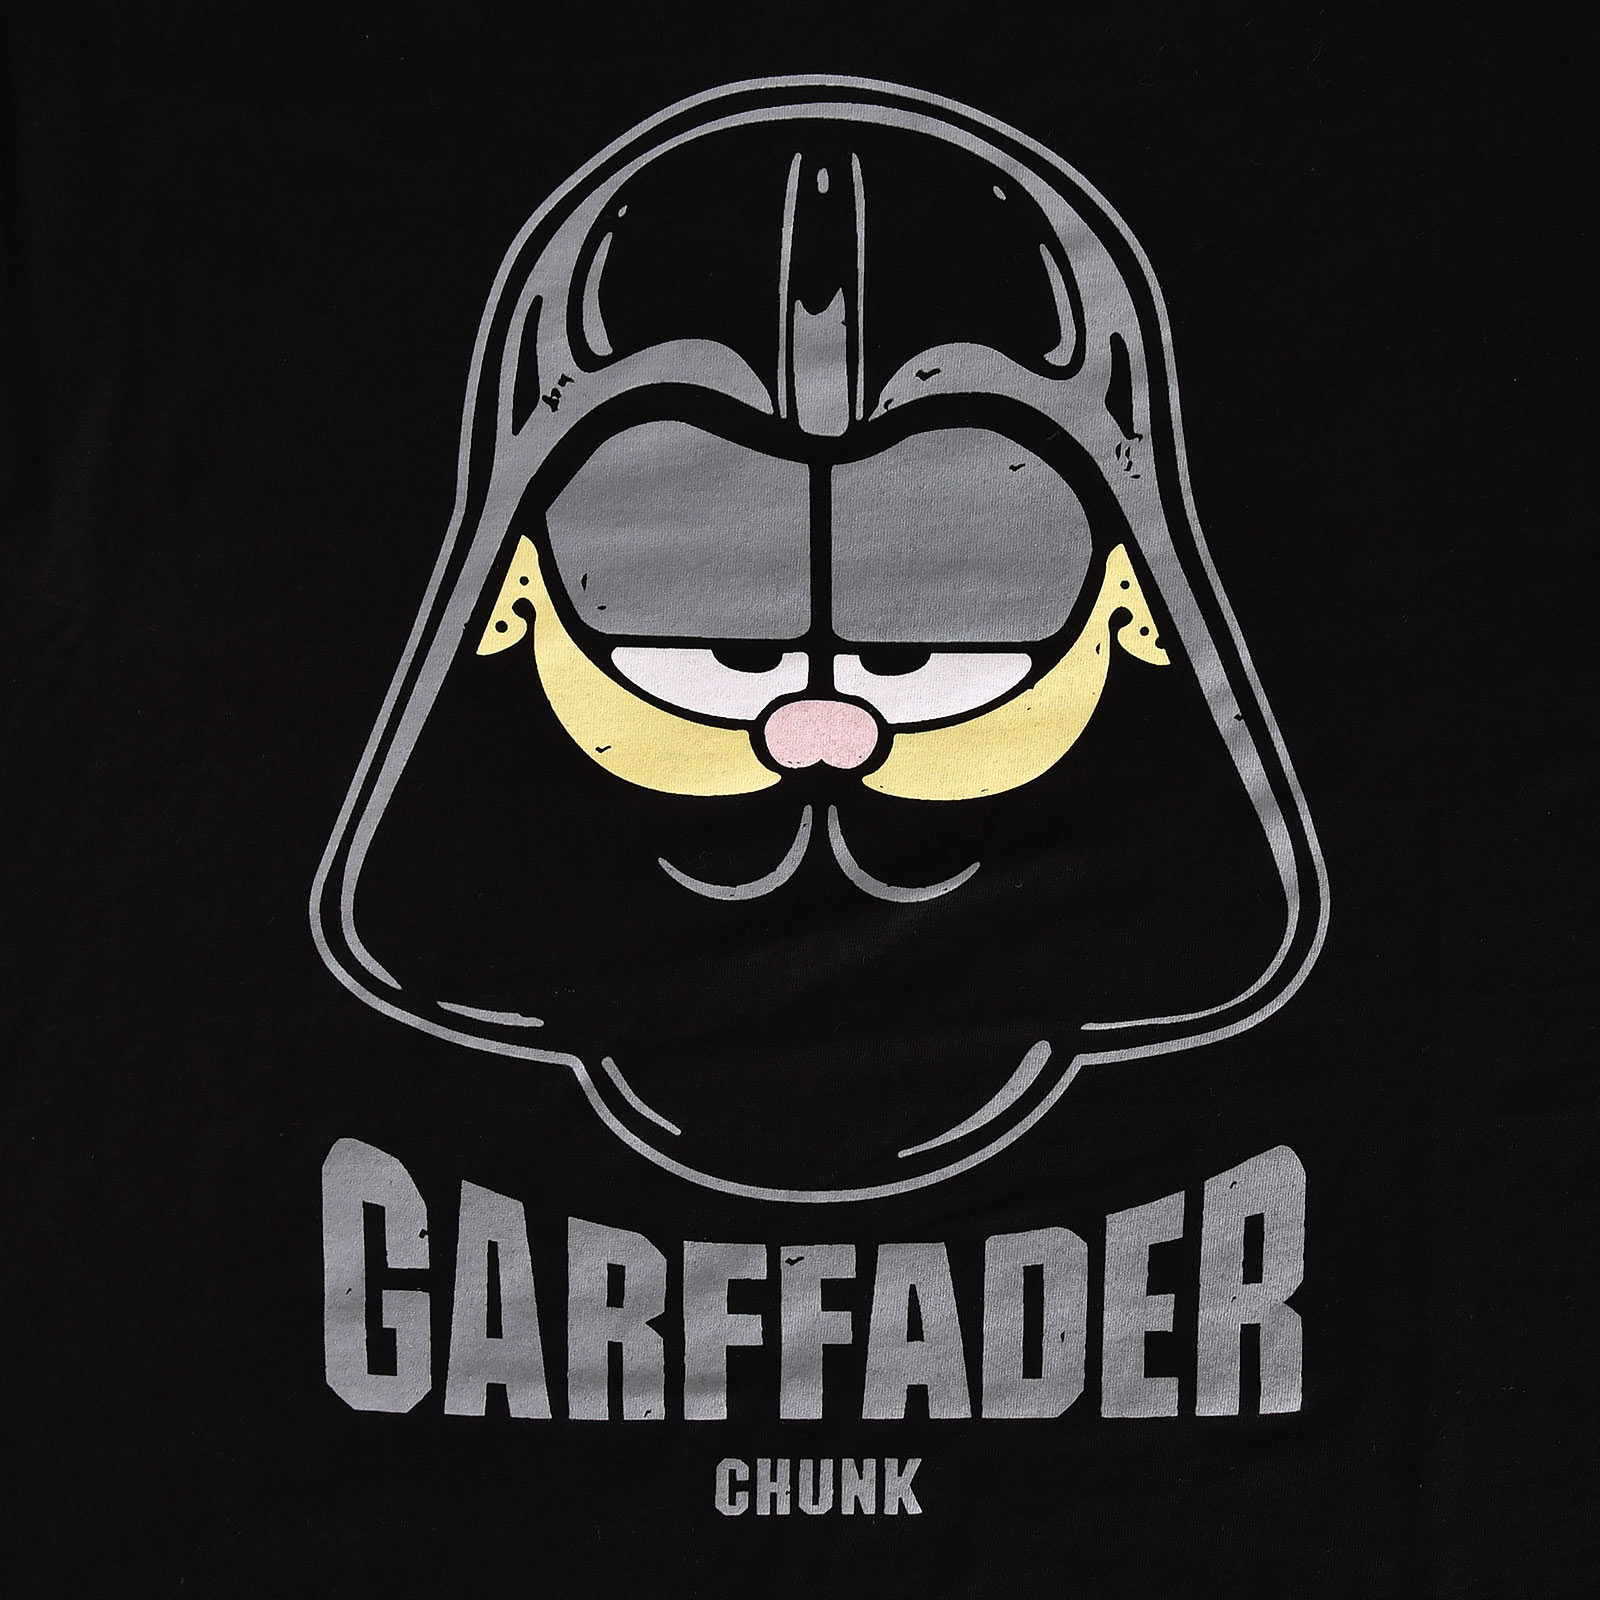 Garffader T-Shirt for Star Wars Fans Black